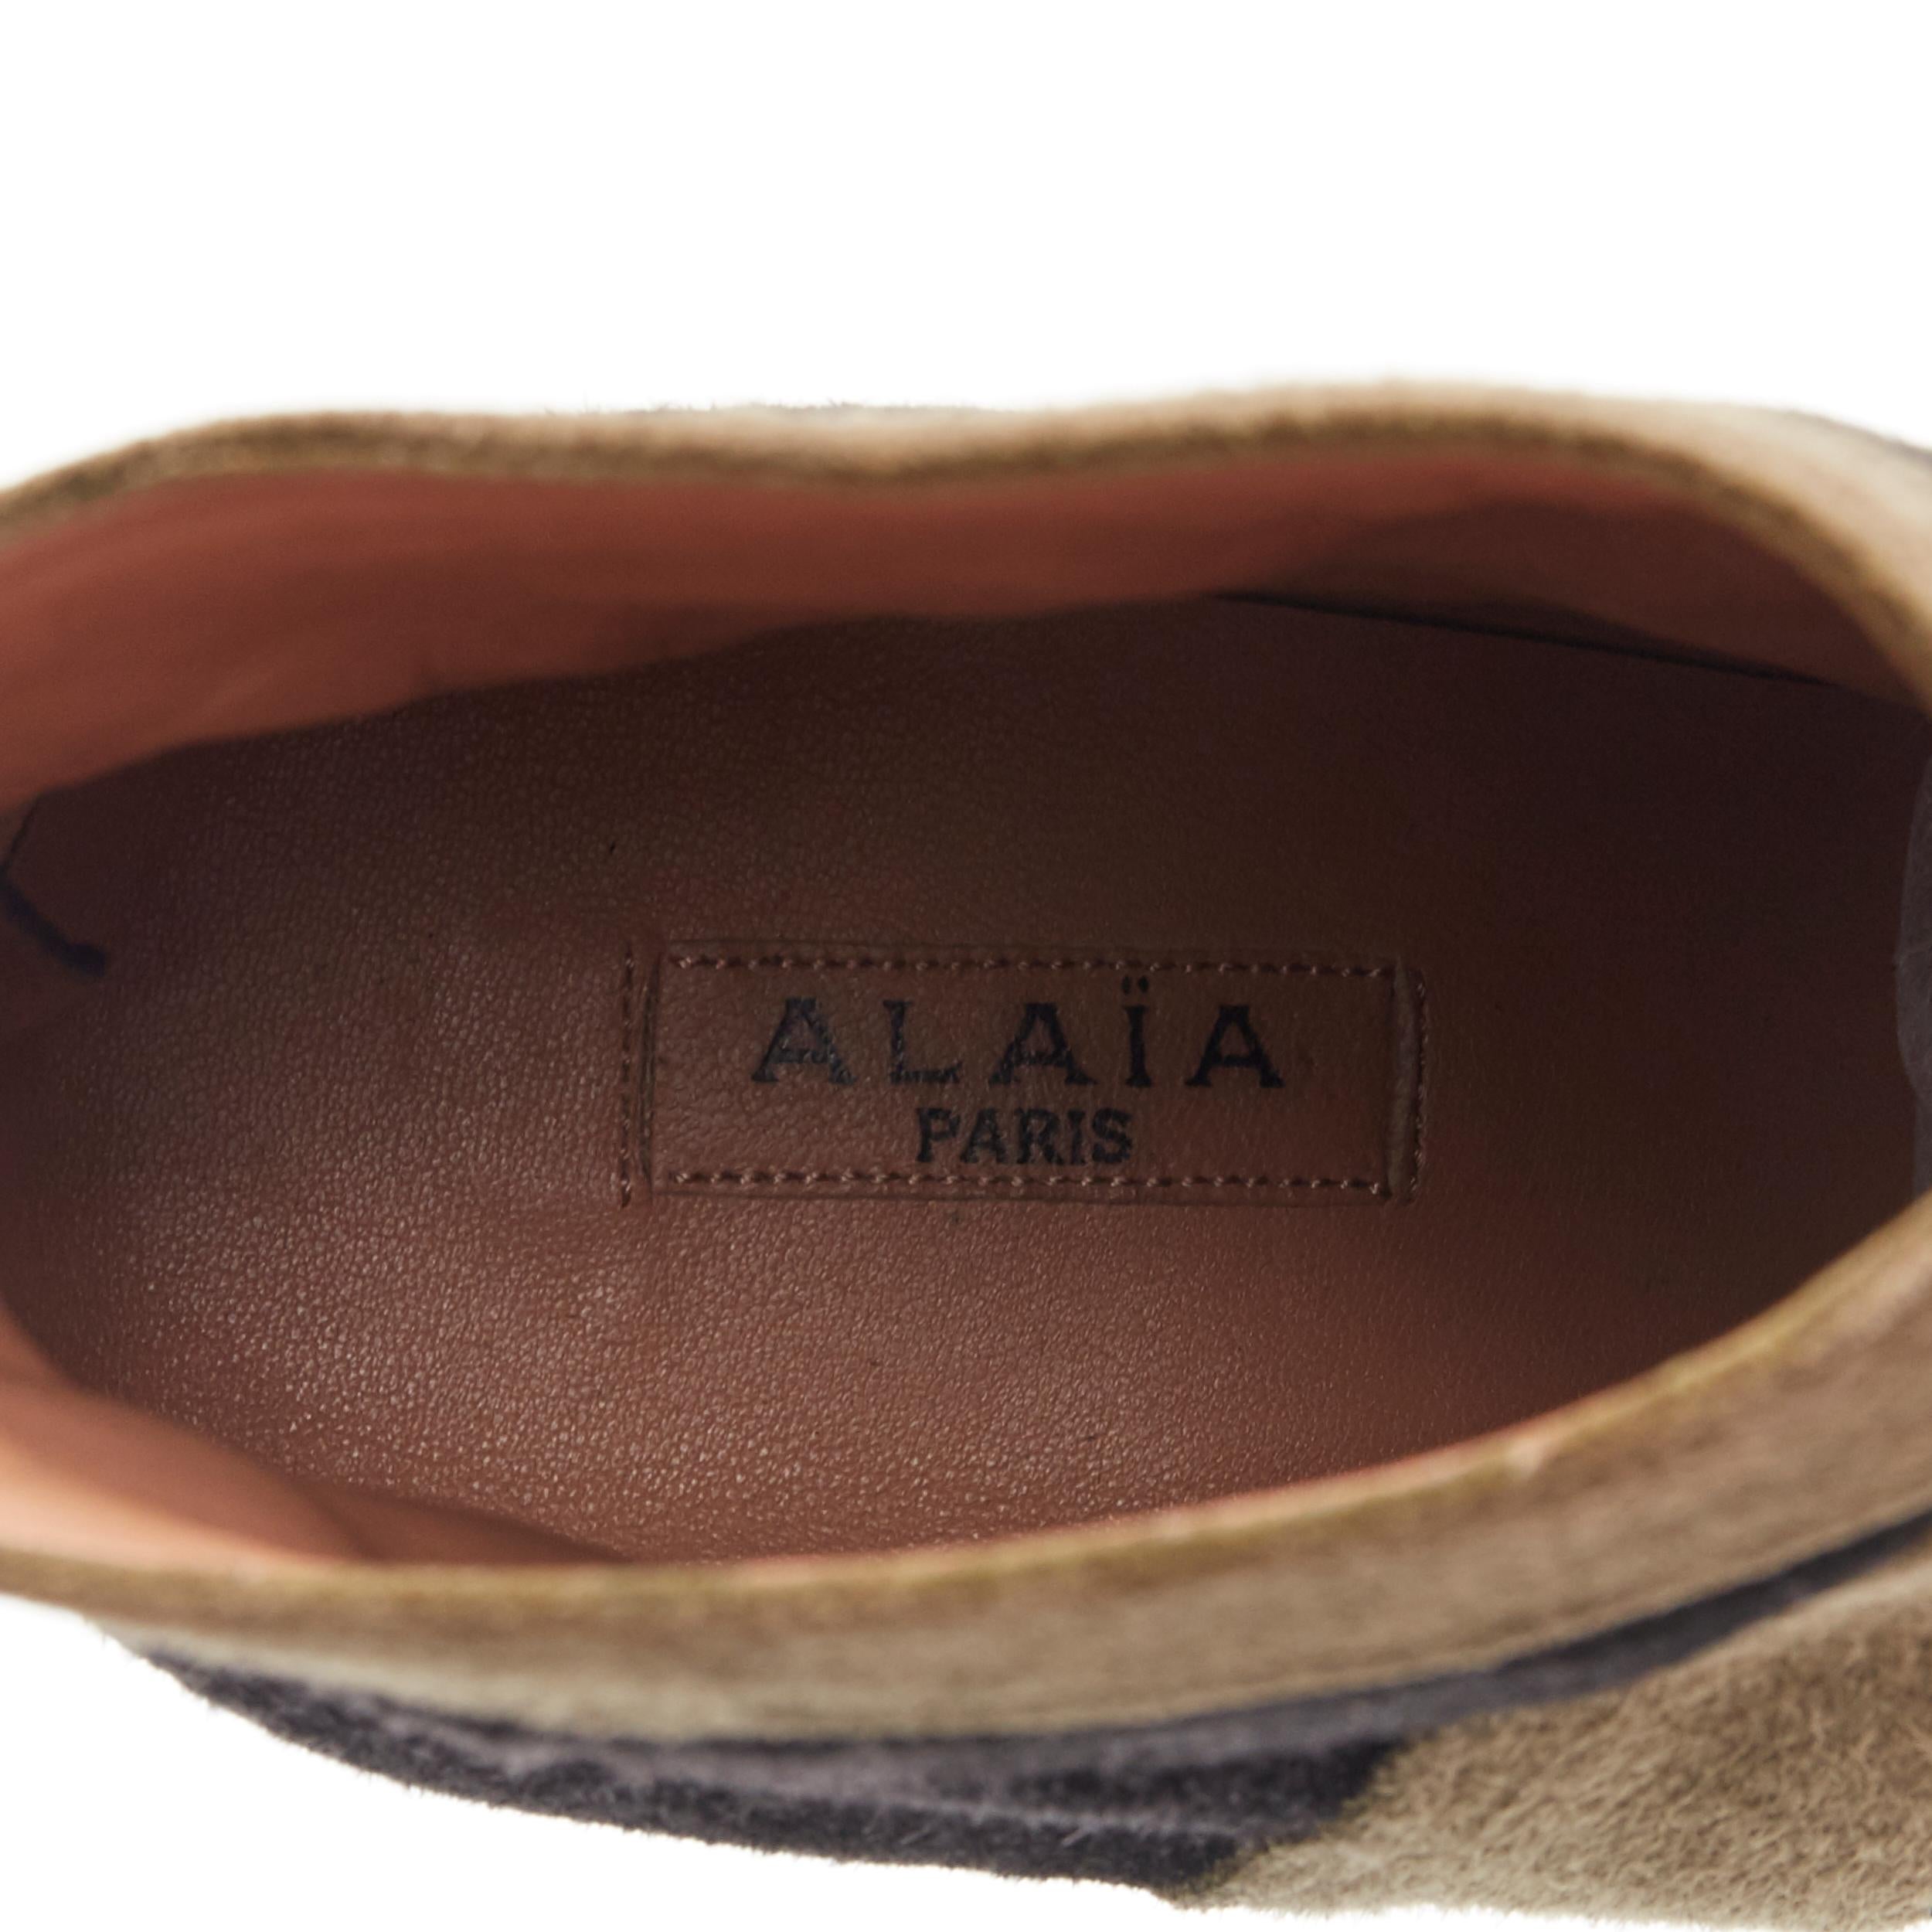 ALAIA black green suede leather cross strap platform high heel ankle bootie EU36 5